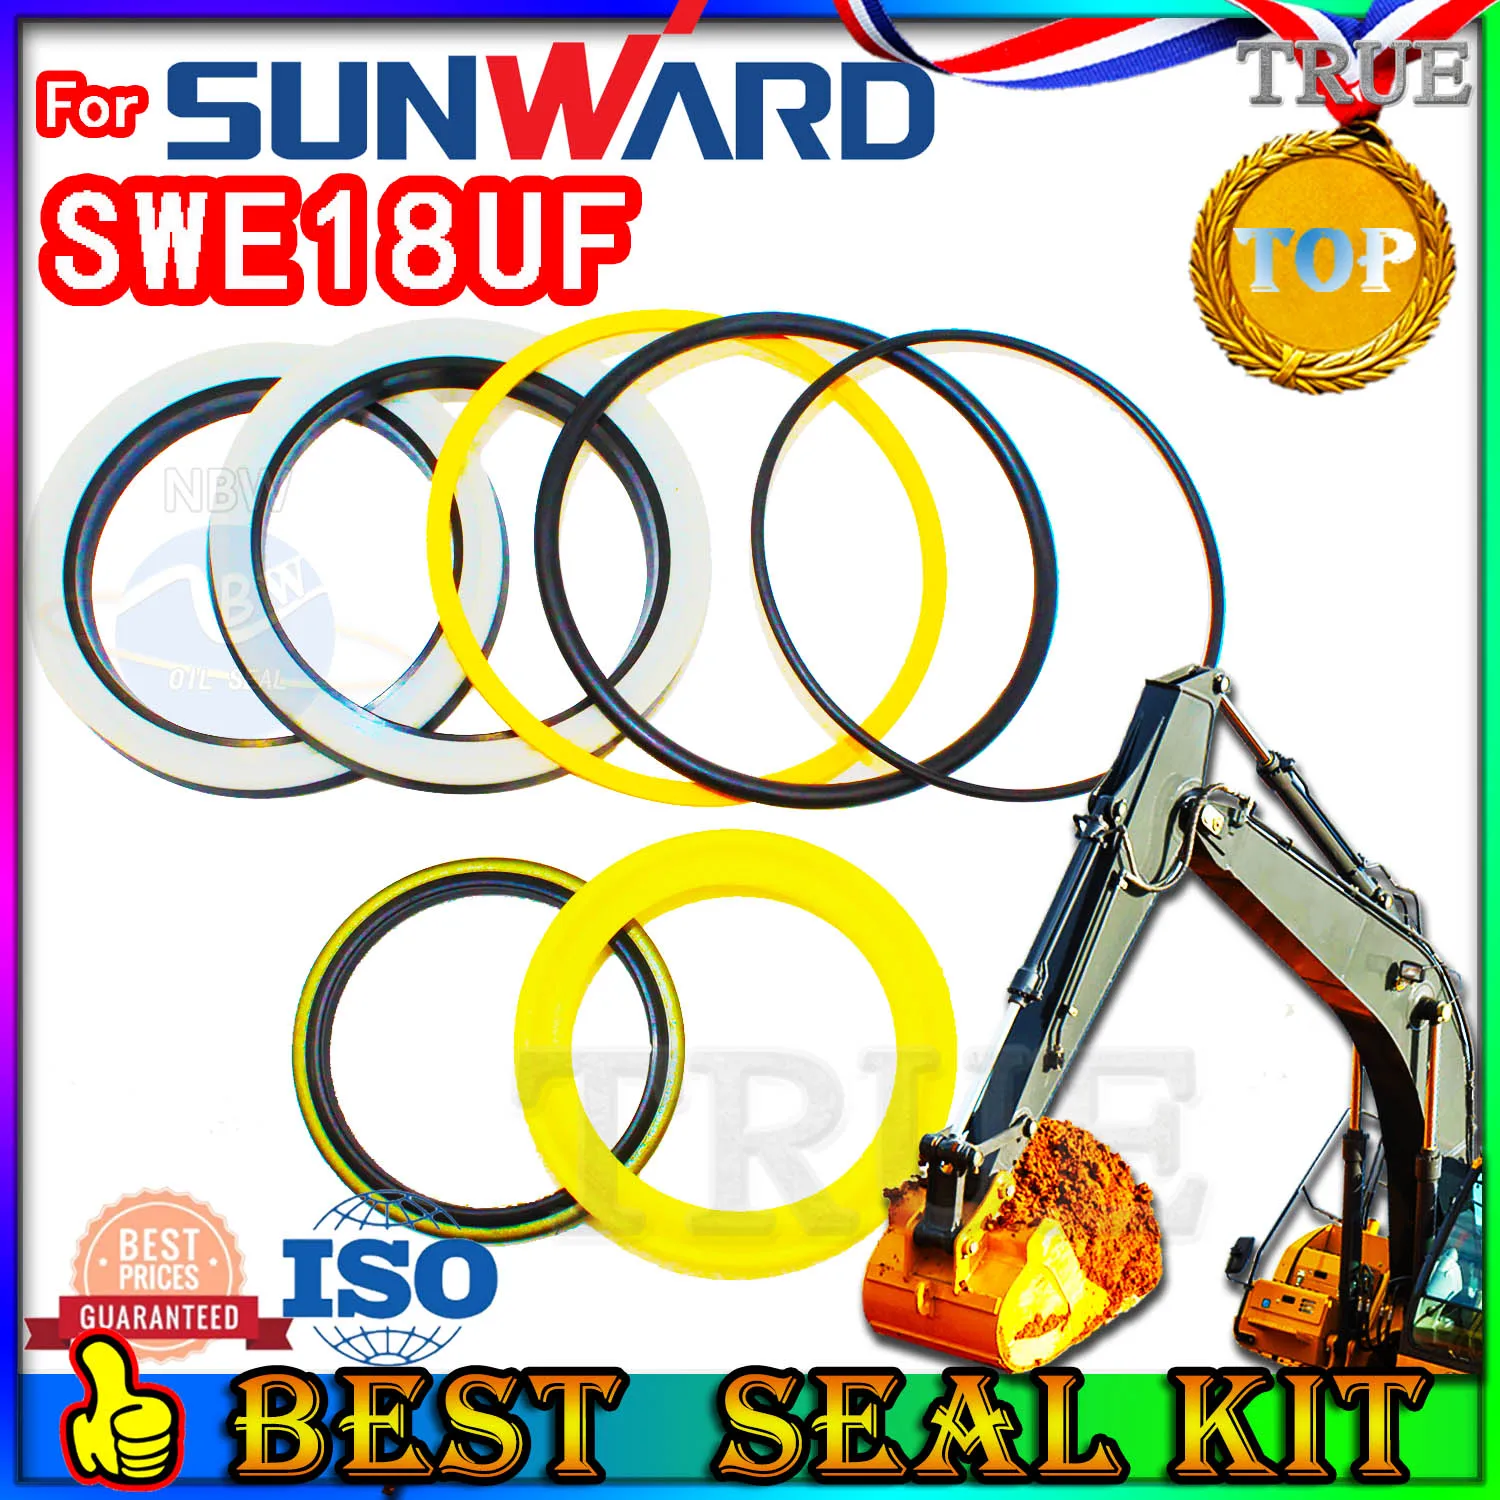 

For Sunward SWE18UF Oil Seal Repair Kit Boom Arm Bucket Excavator Hydraulic Cylinder Center Joint Gasket Nitrile NBR Nok Washer